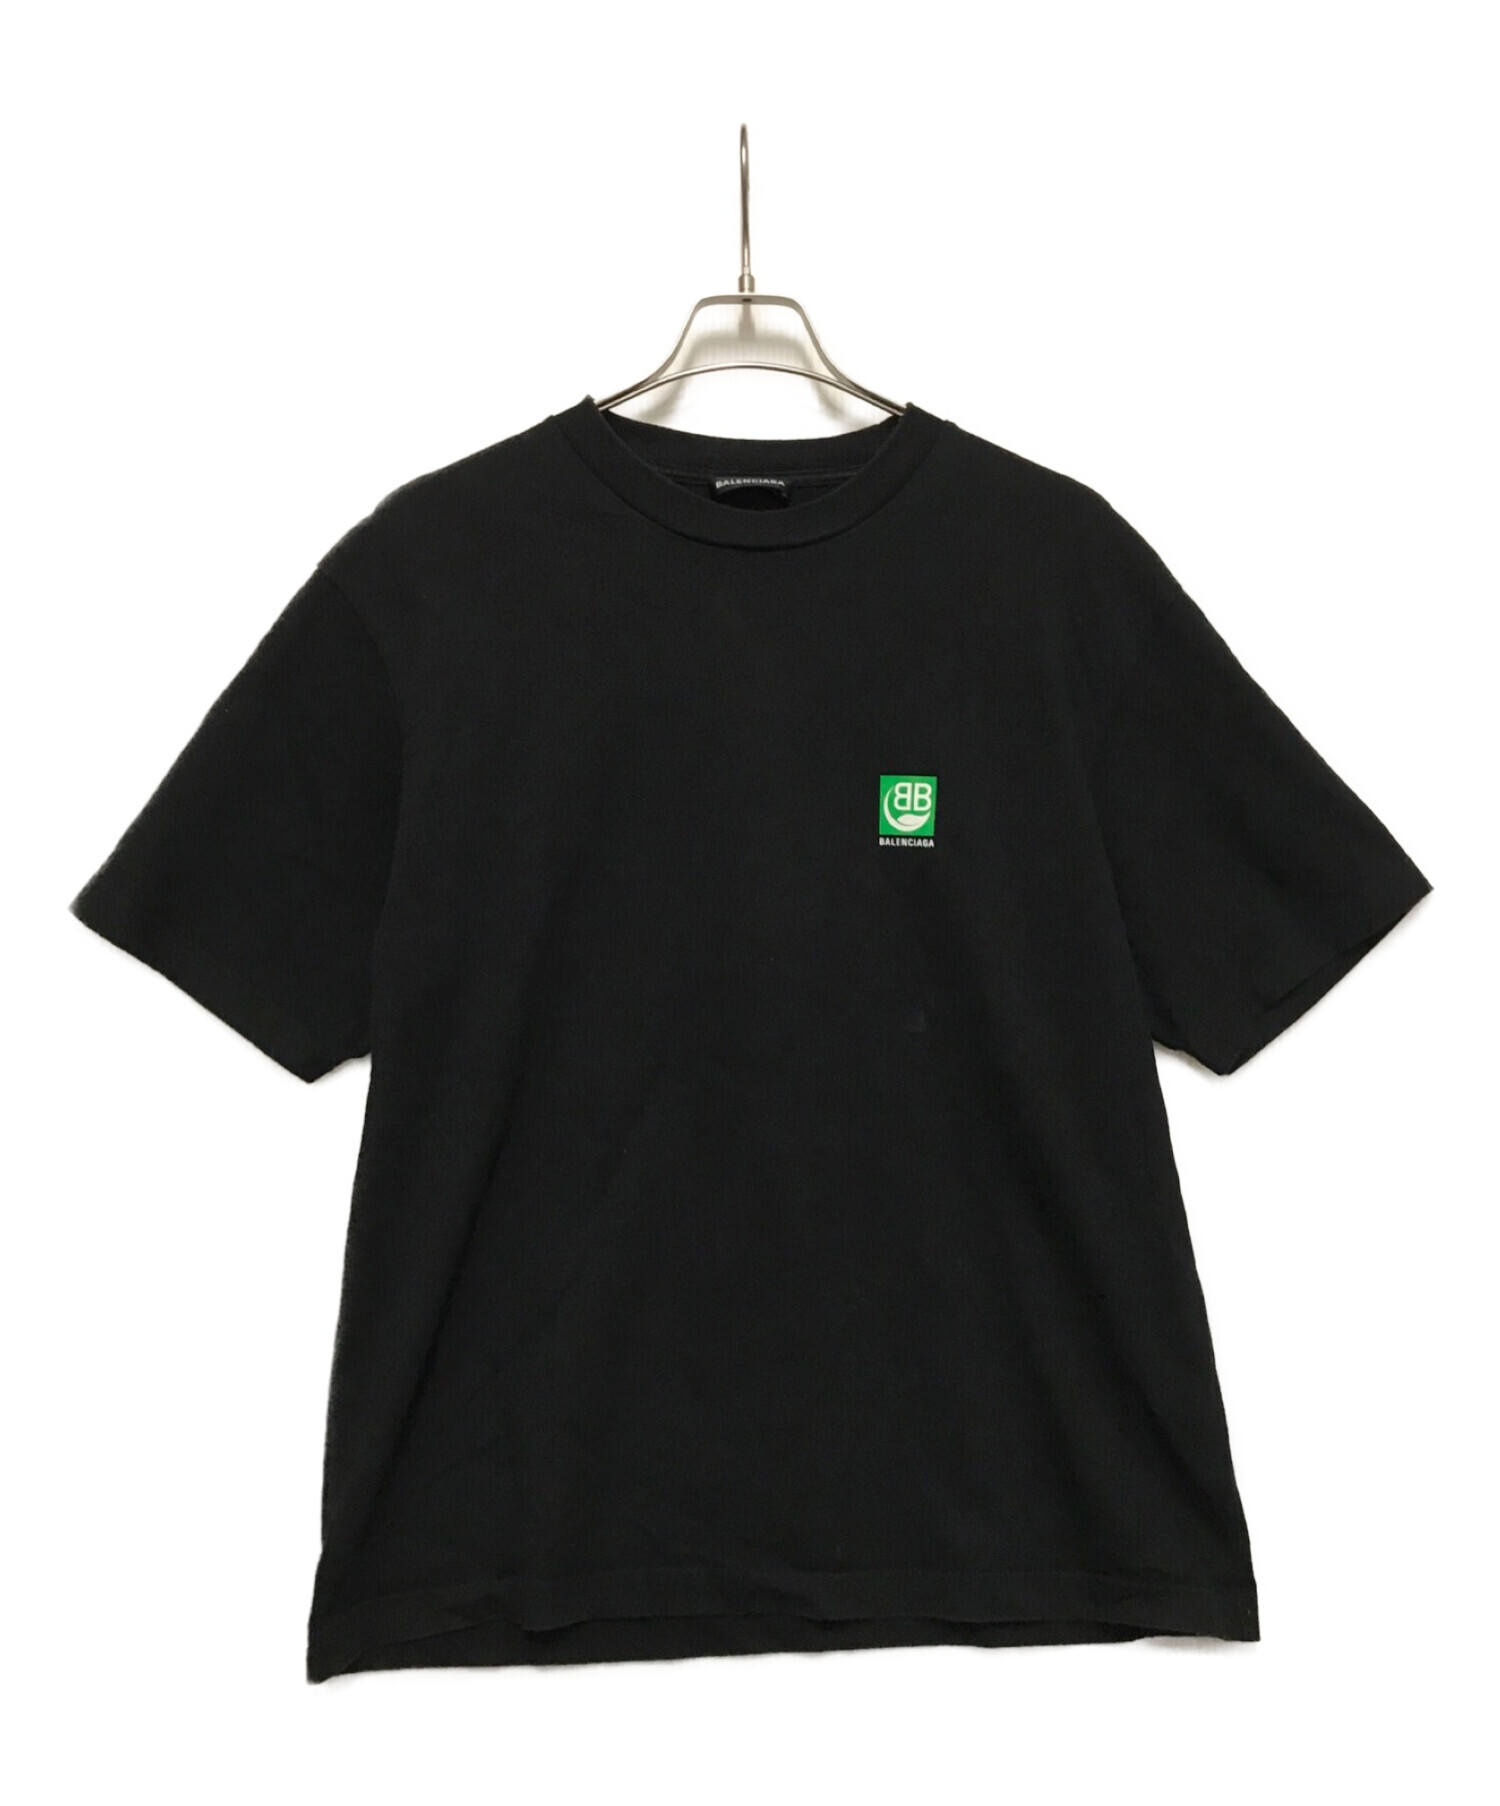 BALENCIAGA (バレンシアガ) BBロゴプリントTシャツ ブラック サイズ:M